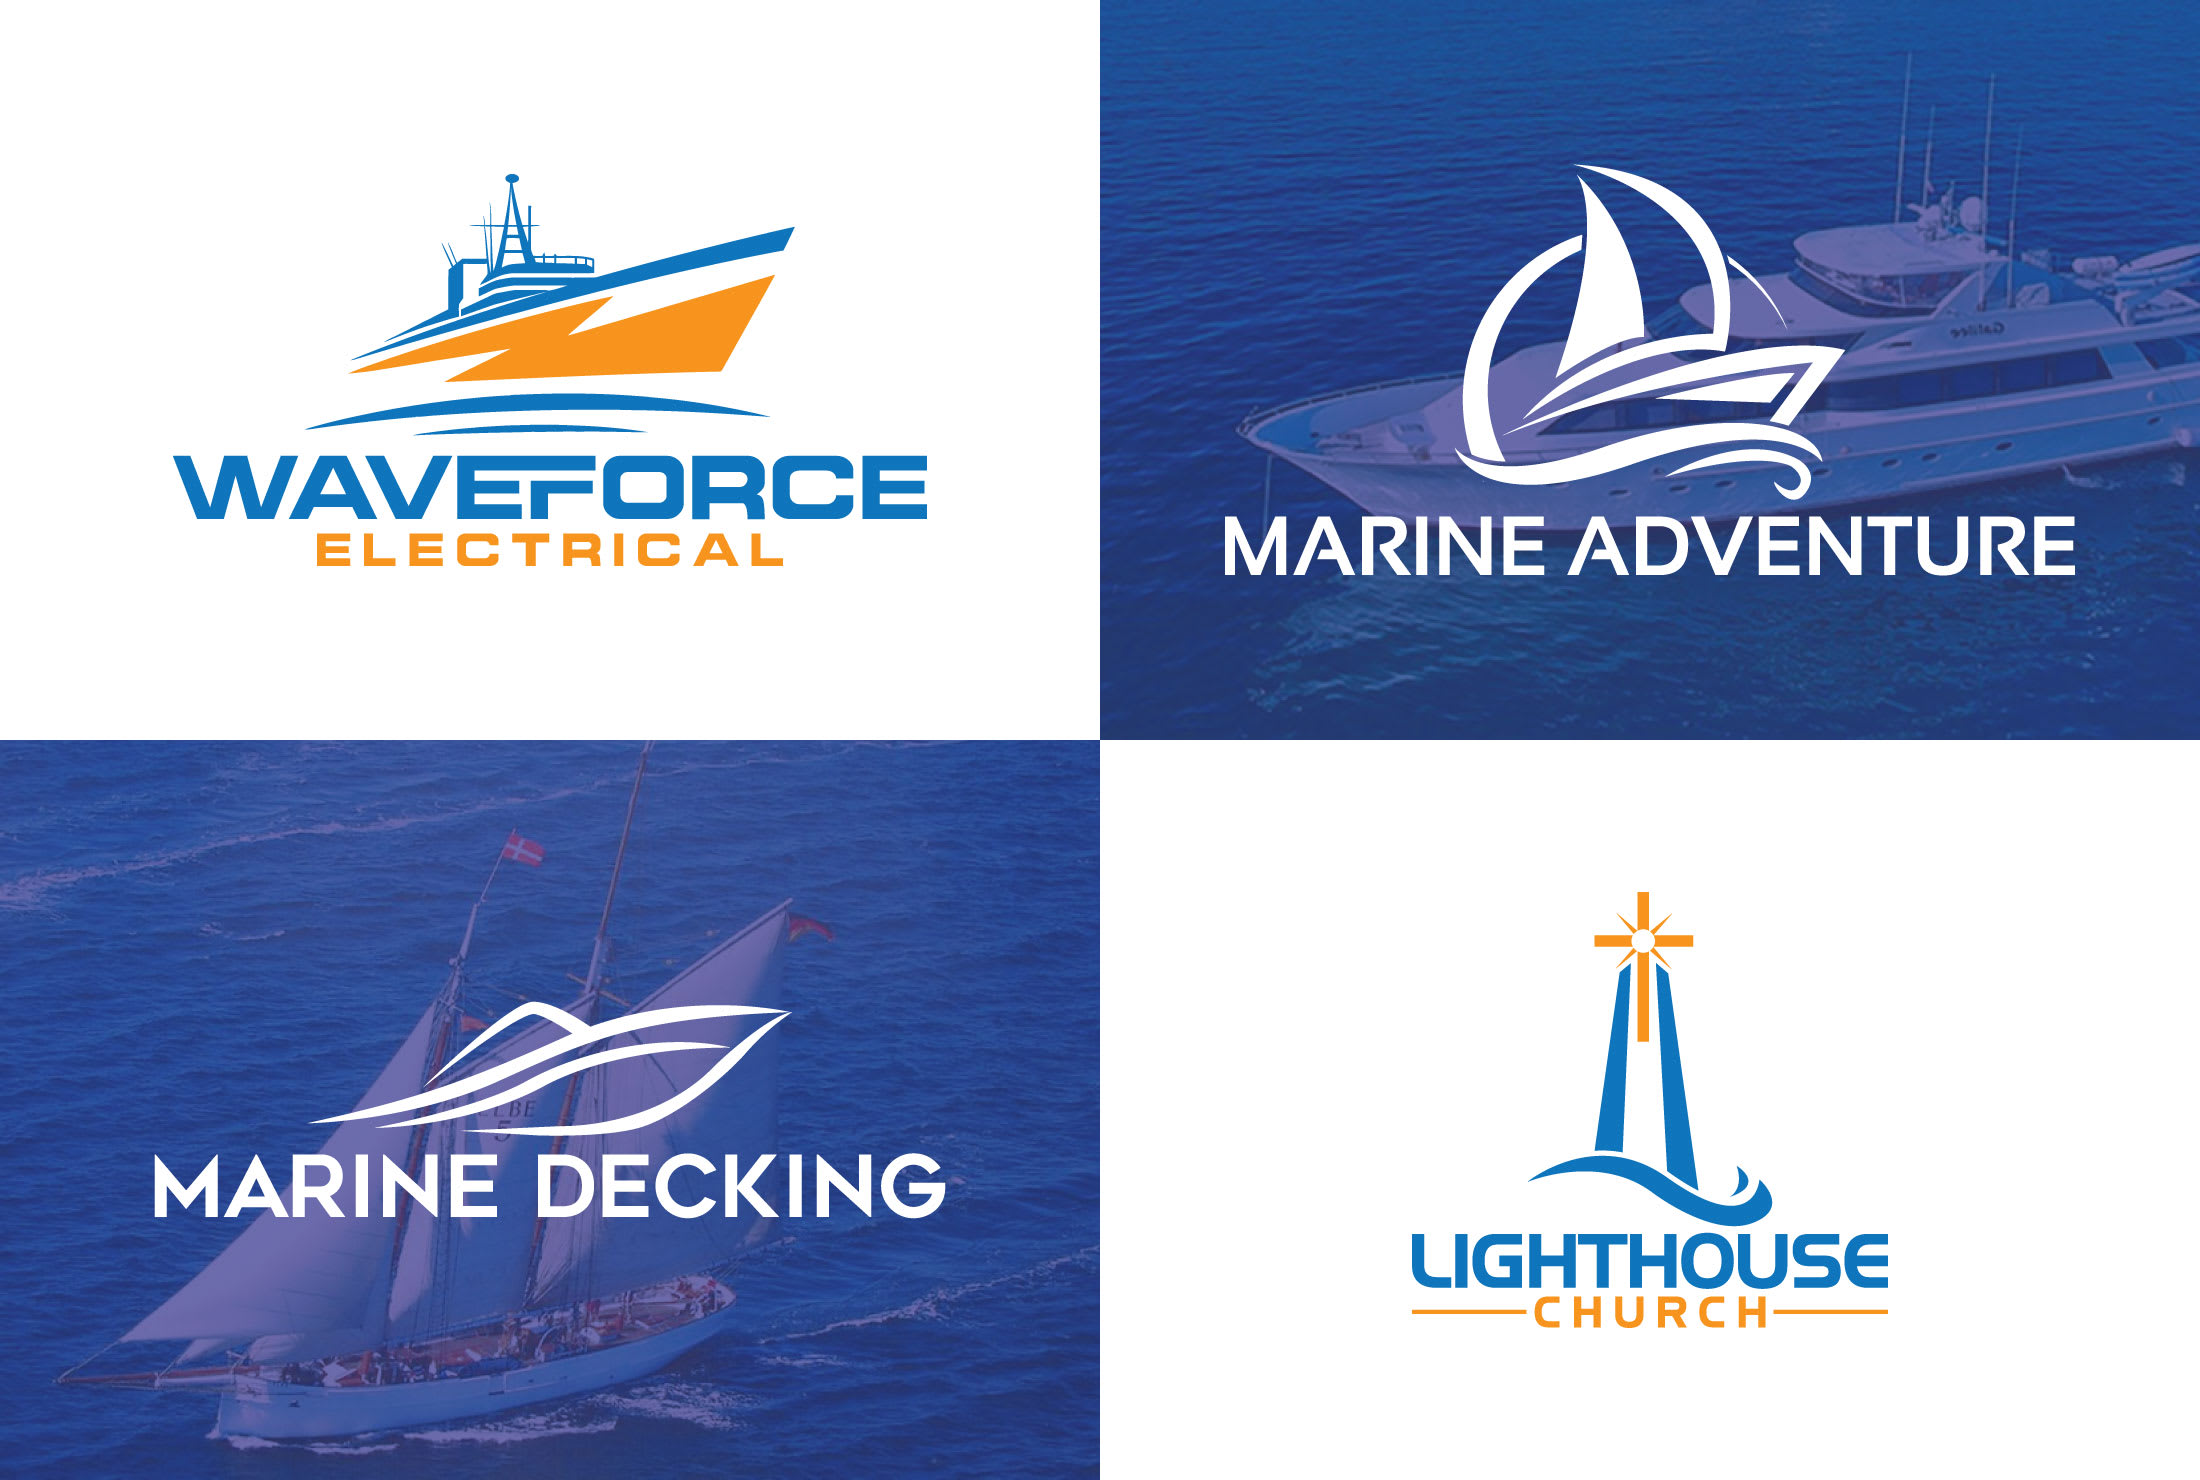 van-lent-yachtbuilders-logo - More Marine Superyacht items